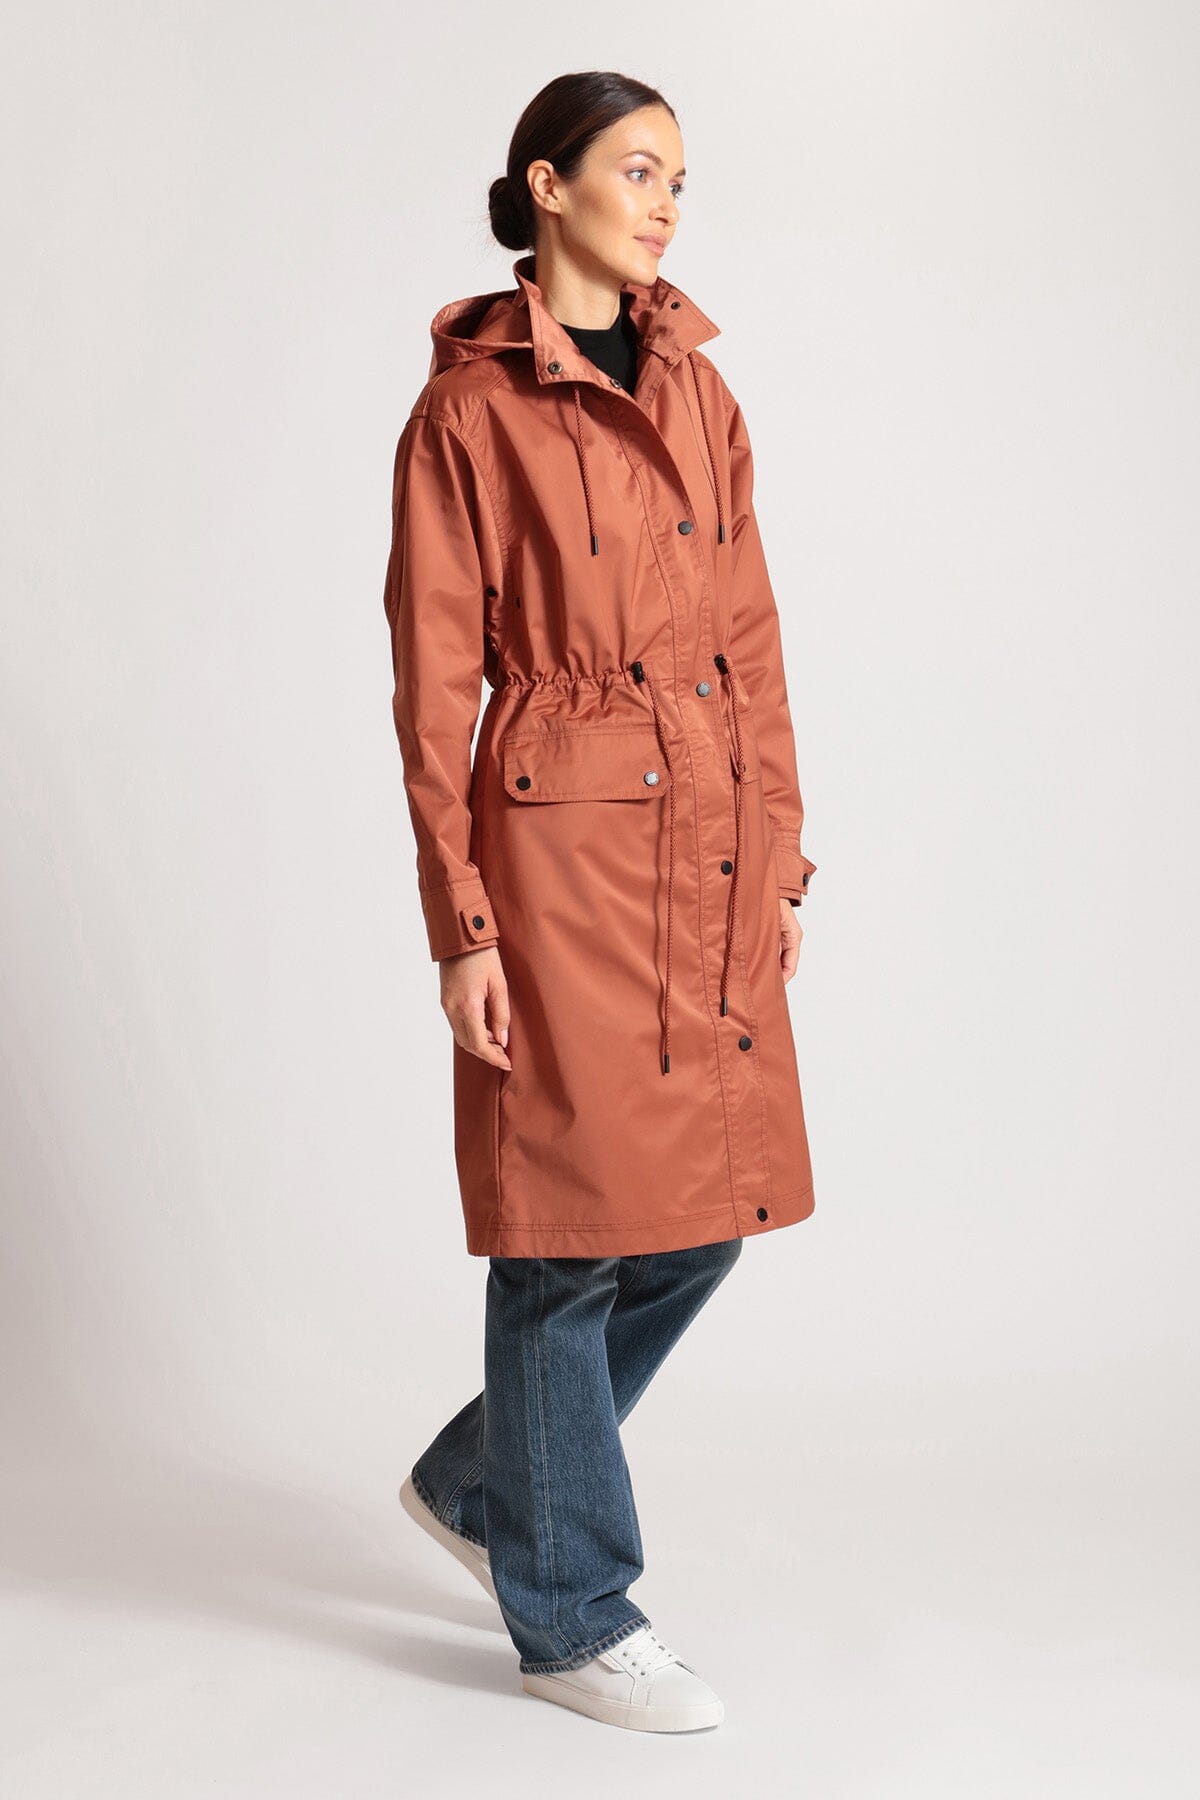 Rust orange relaxed water resistant rain anorak coat jacket - figure flattering Fall raincoats coats for women by Avec Les Filles